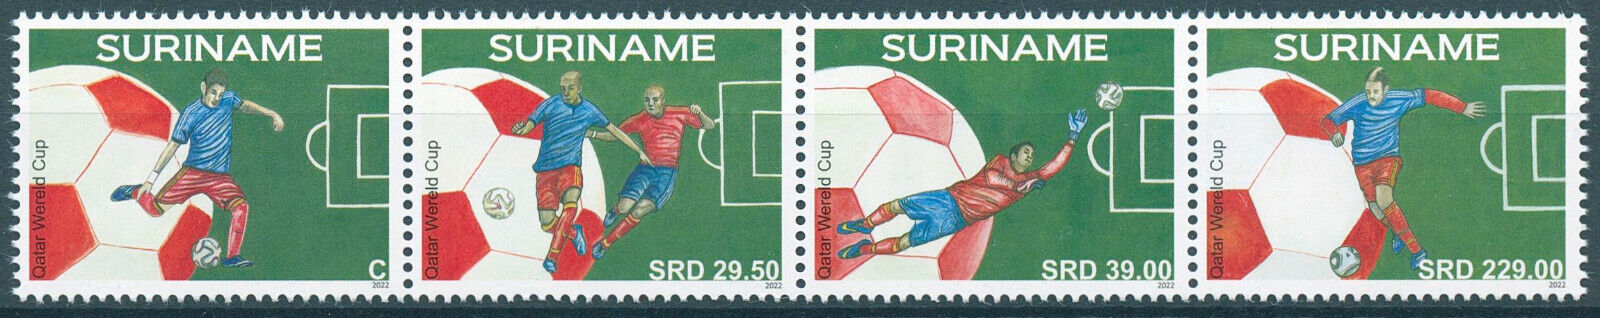 Suriname 2022 MNH Sports Stamps Qatar World Cup Football Soccer 4v Strip